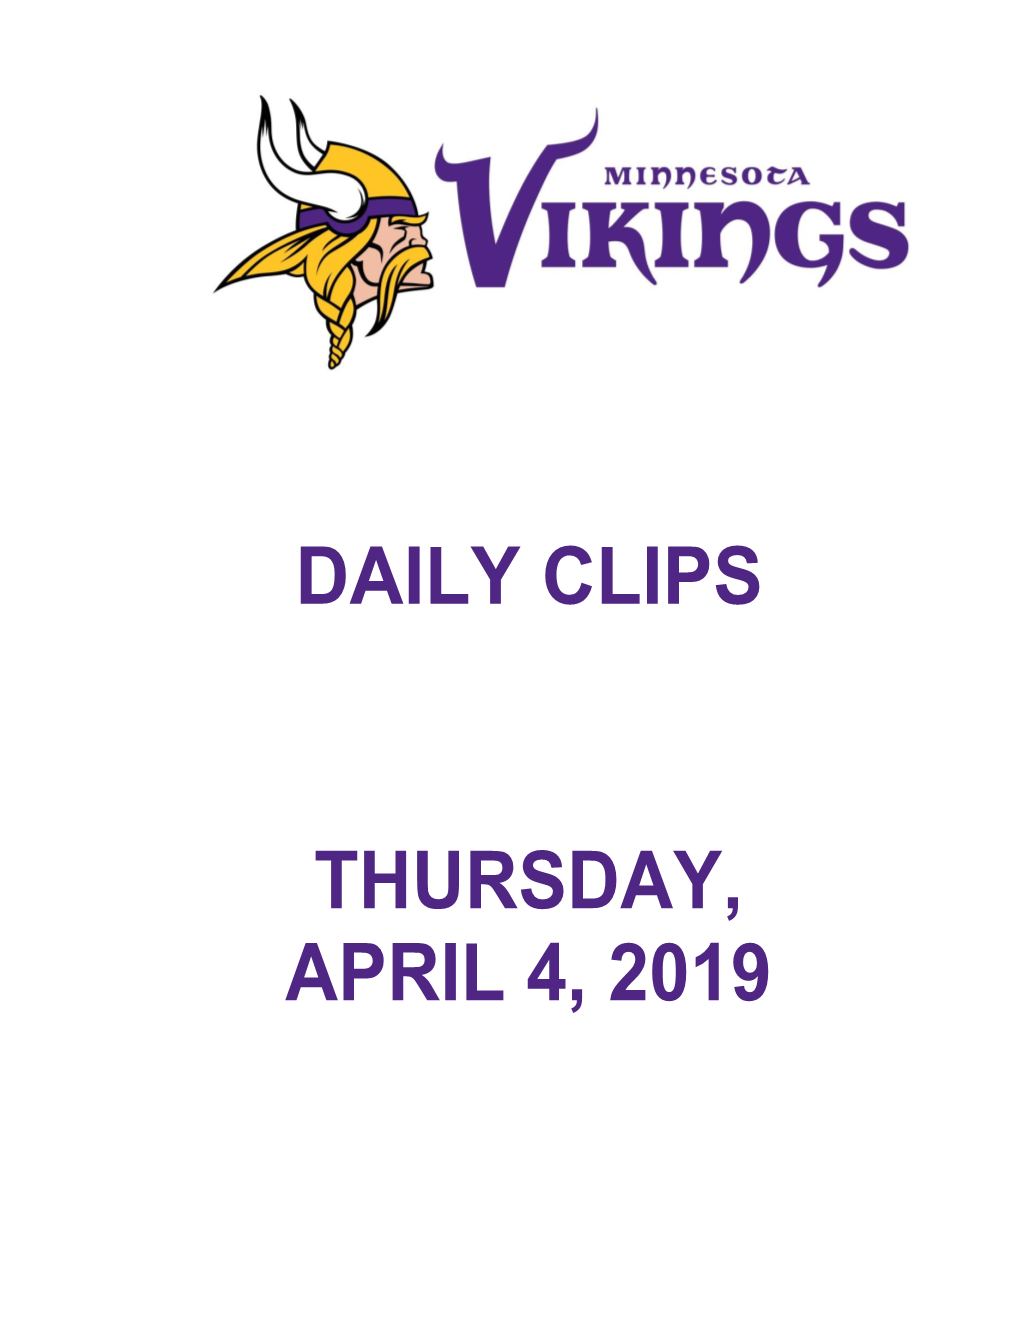 Daily Clips Thursday, April 4, 2019